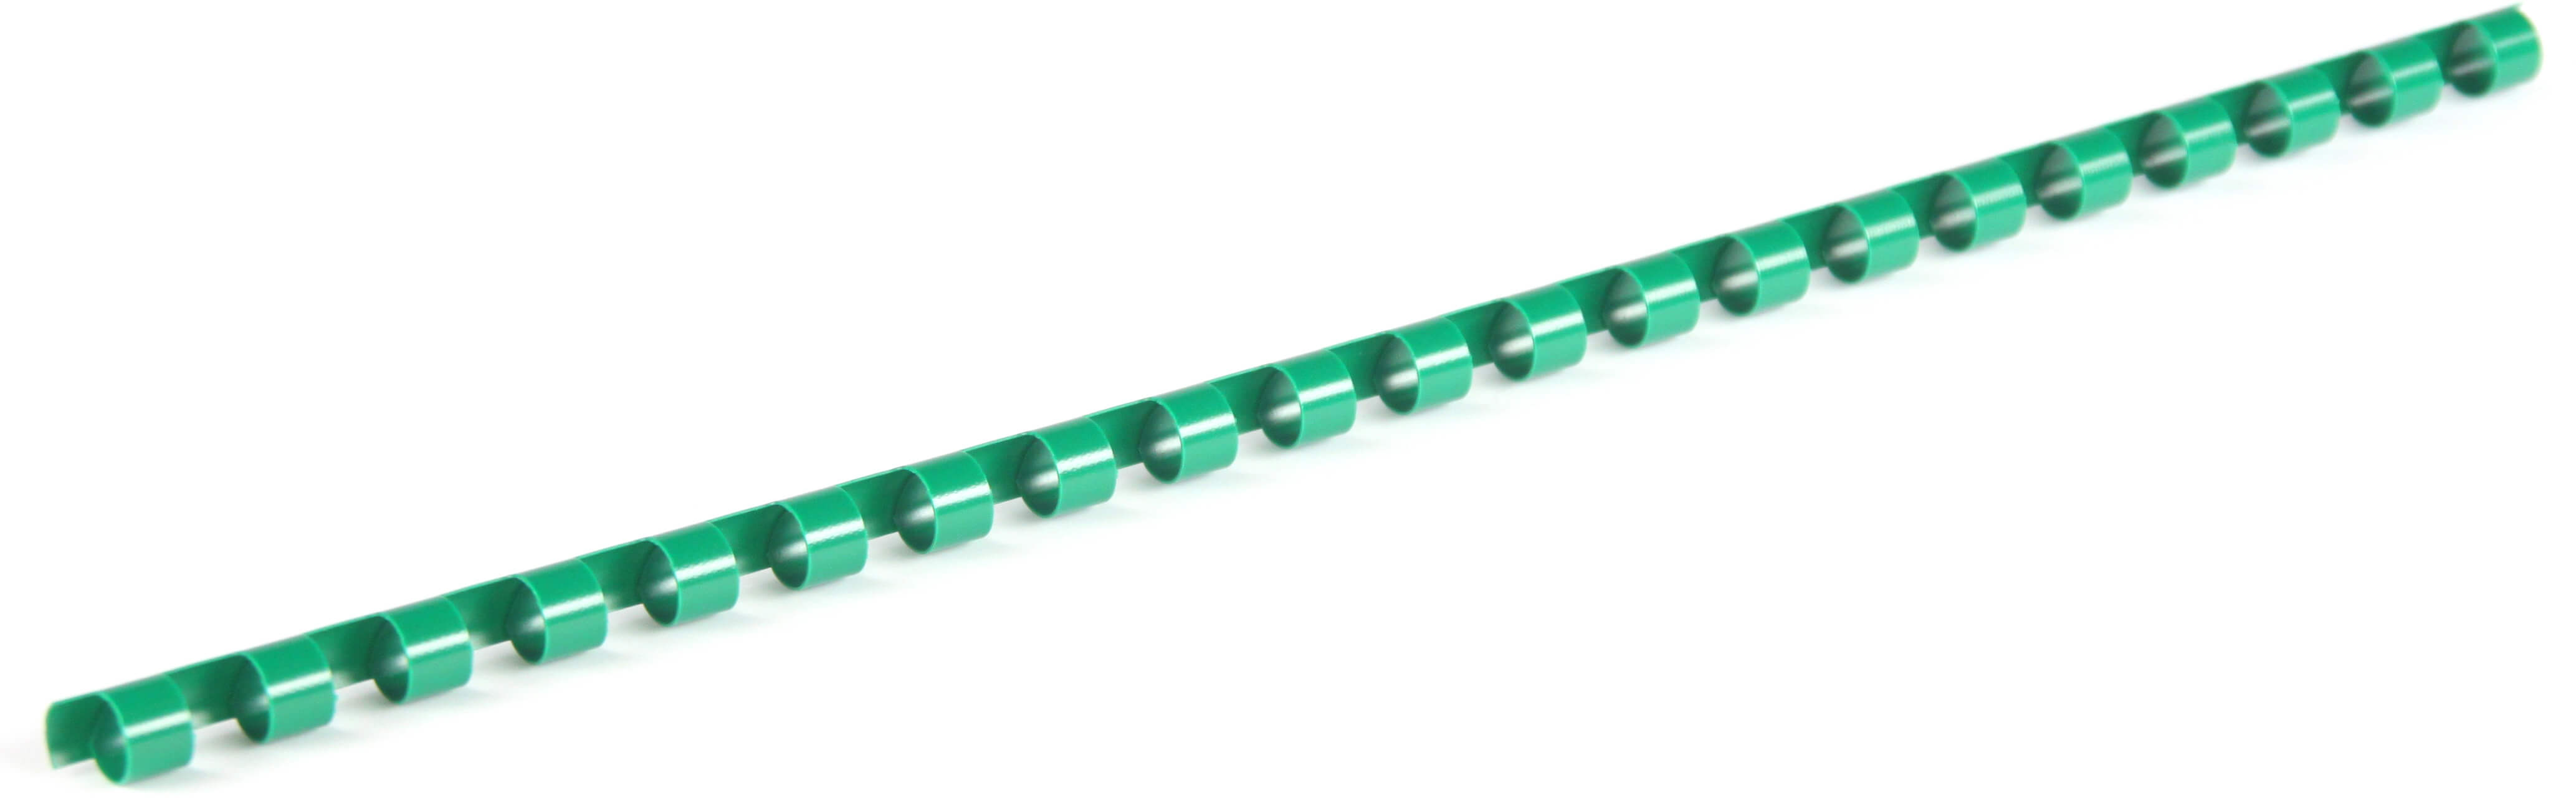 Plastikbinderücken 21 Ringe 8mm grün (100 Stück)